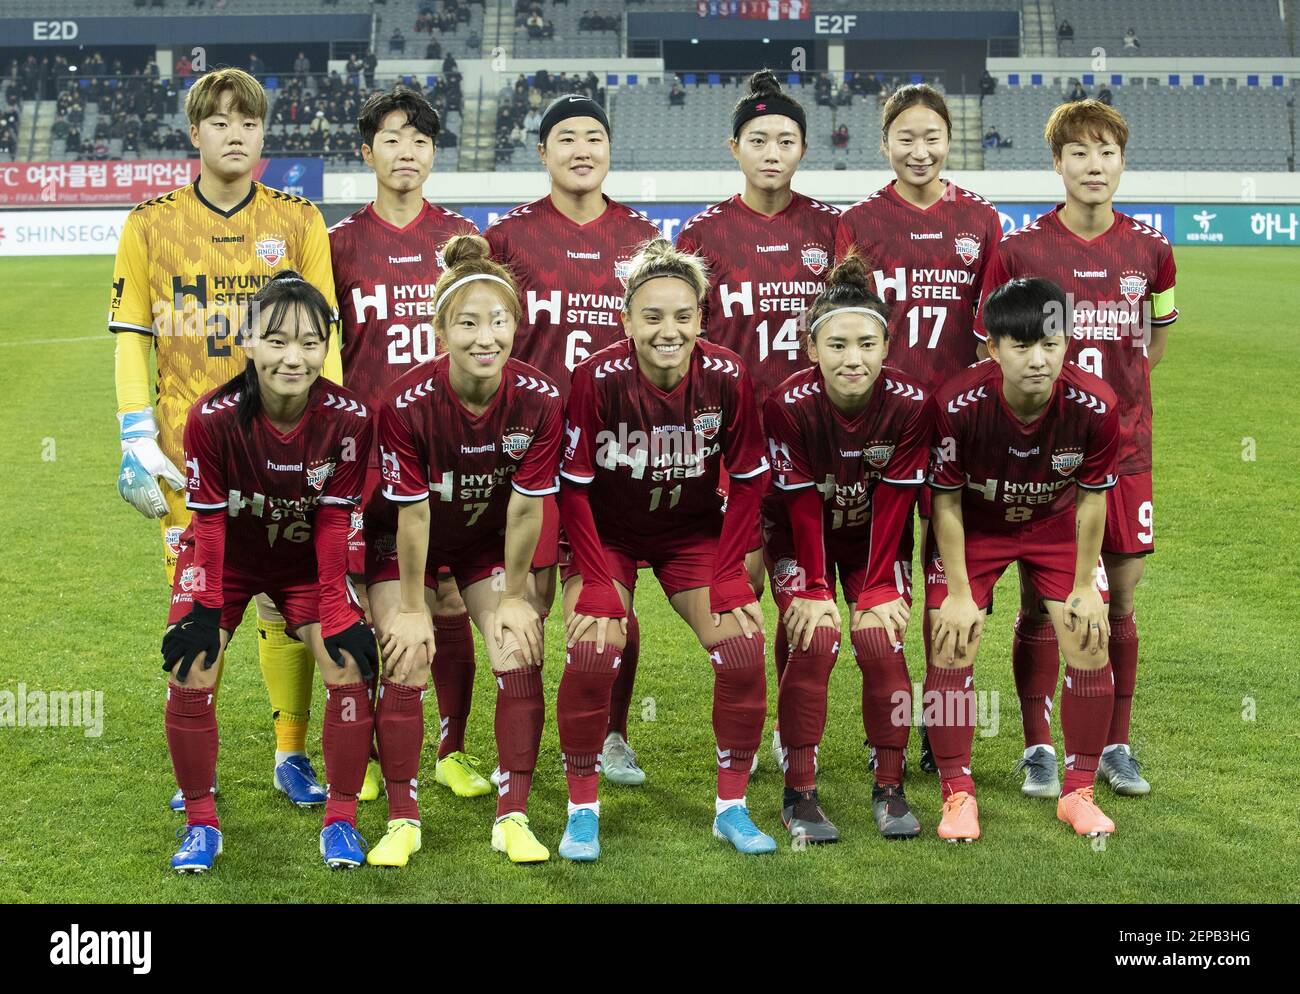 26 November 2019 - Yongin, South Korea : Incheon Hyundai Red Angels team during the Women's Club Championship 2019 - FIFA/AFC Pilot Tournament between Incheon Hyundai Steel Red Angels (S, Korea)